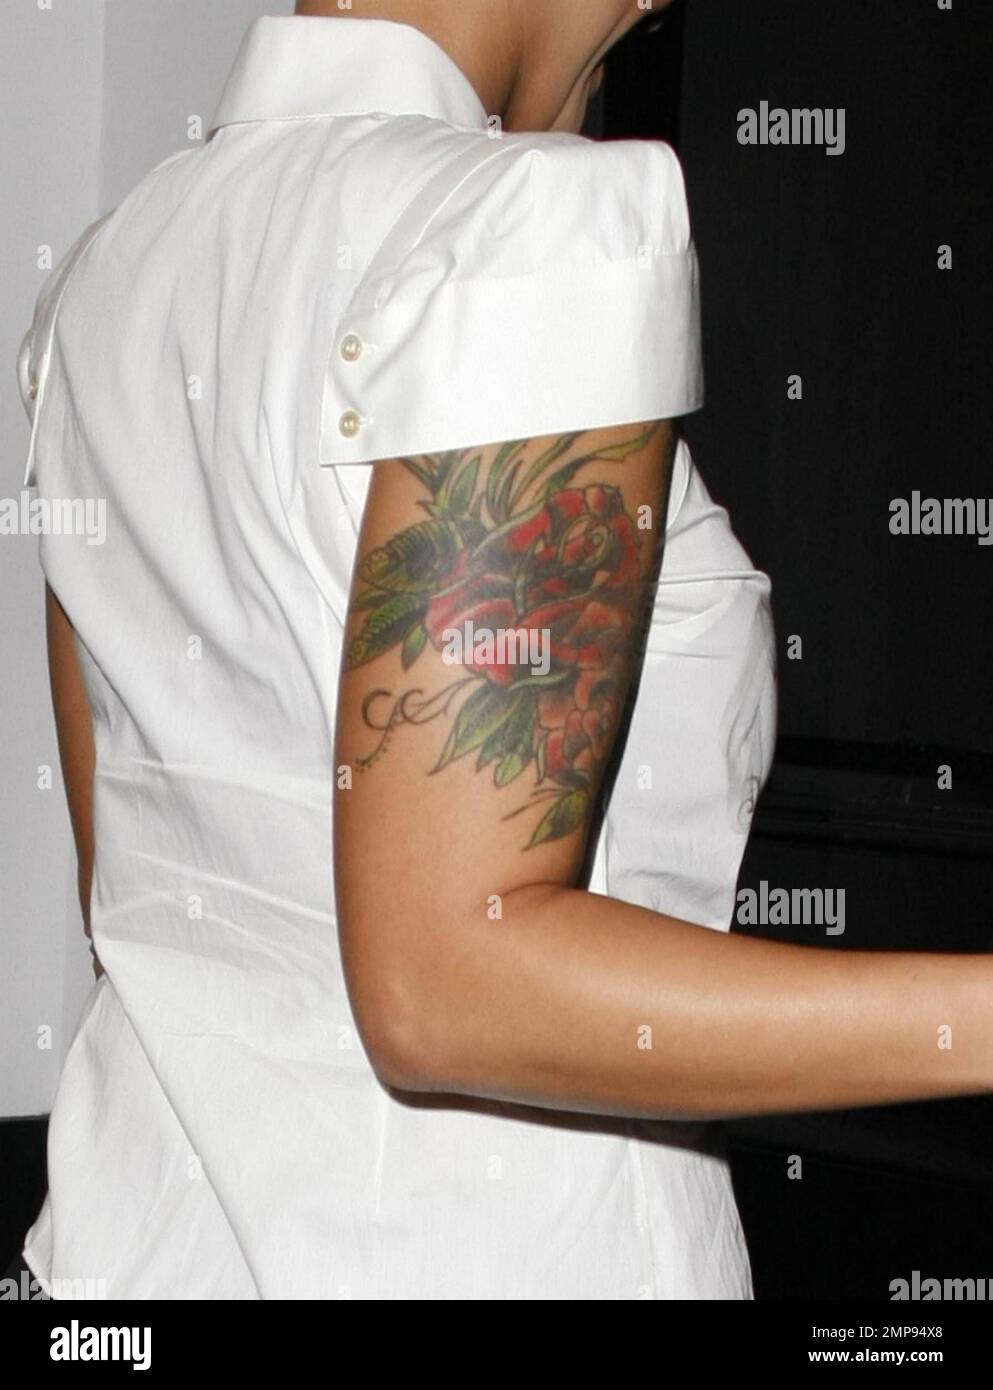 amber rose arm tattoos